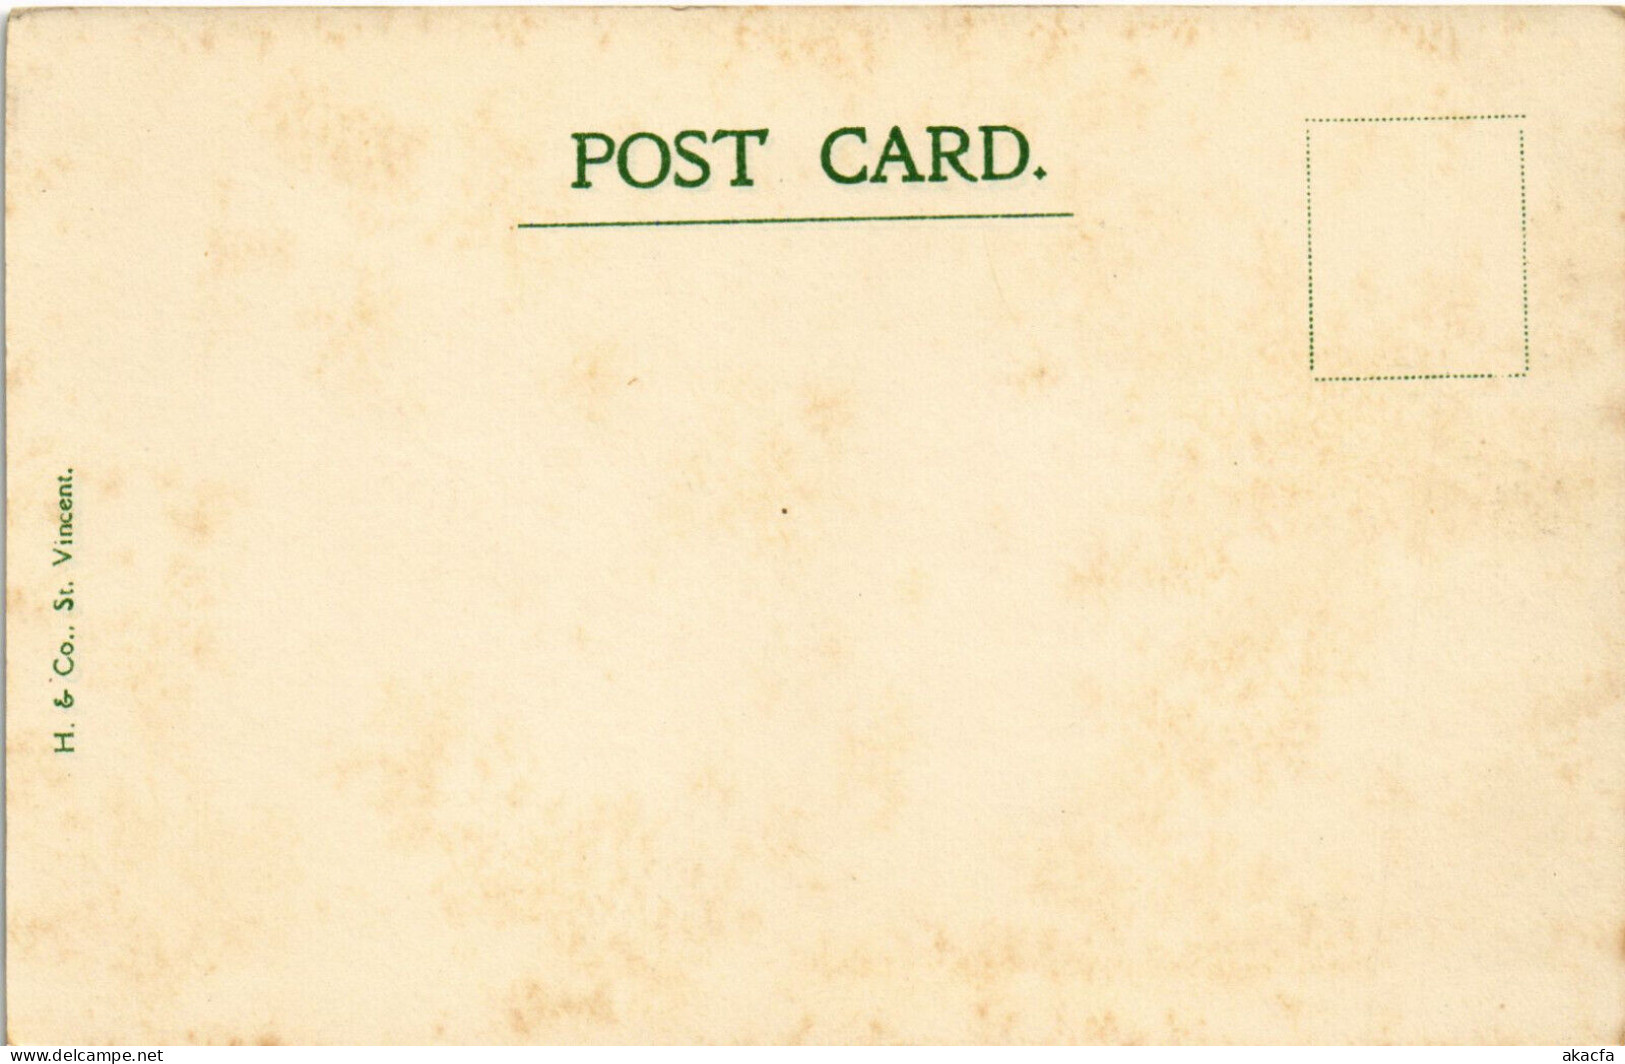 PC VIRGIN ISLANDS NEW VILLAGE FRENCHES Vintage Postcard (b52257) - Virgin Islands, British